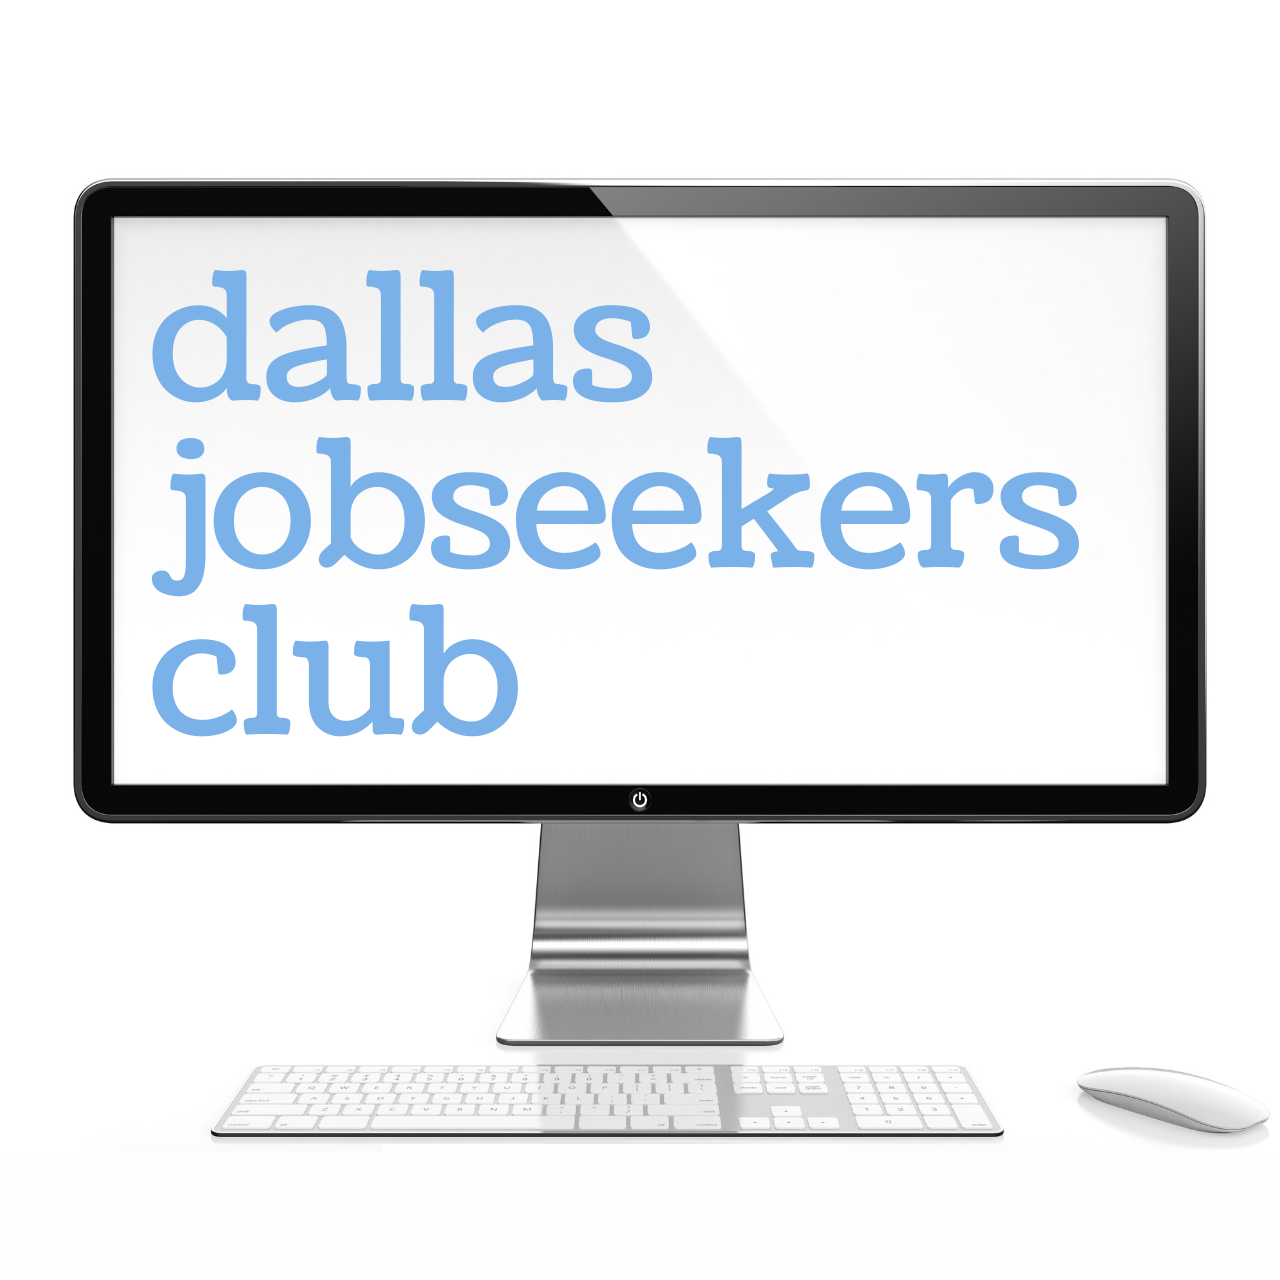 Dallas Jobseekers Club logo displayed on a computer screen